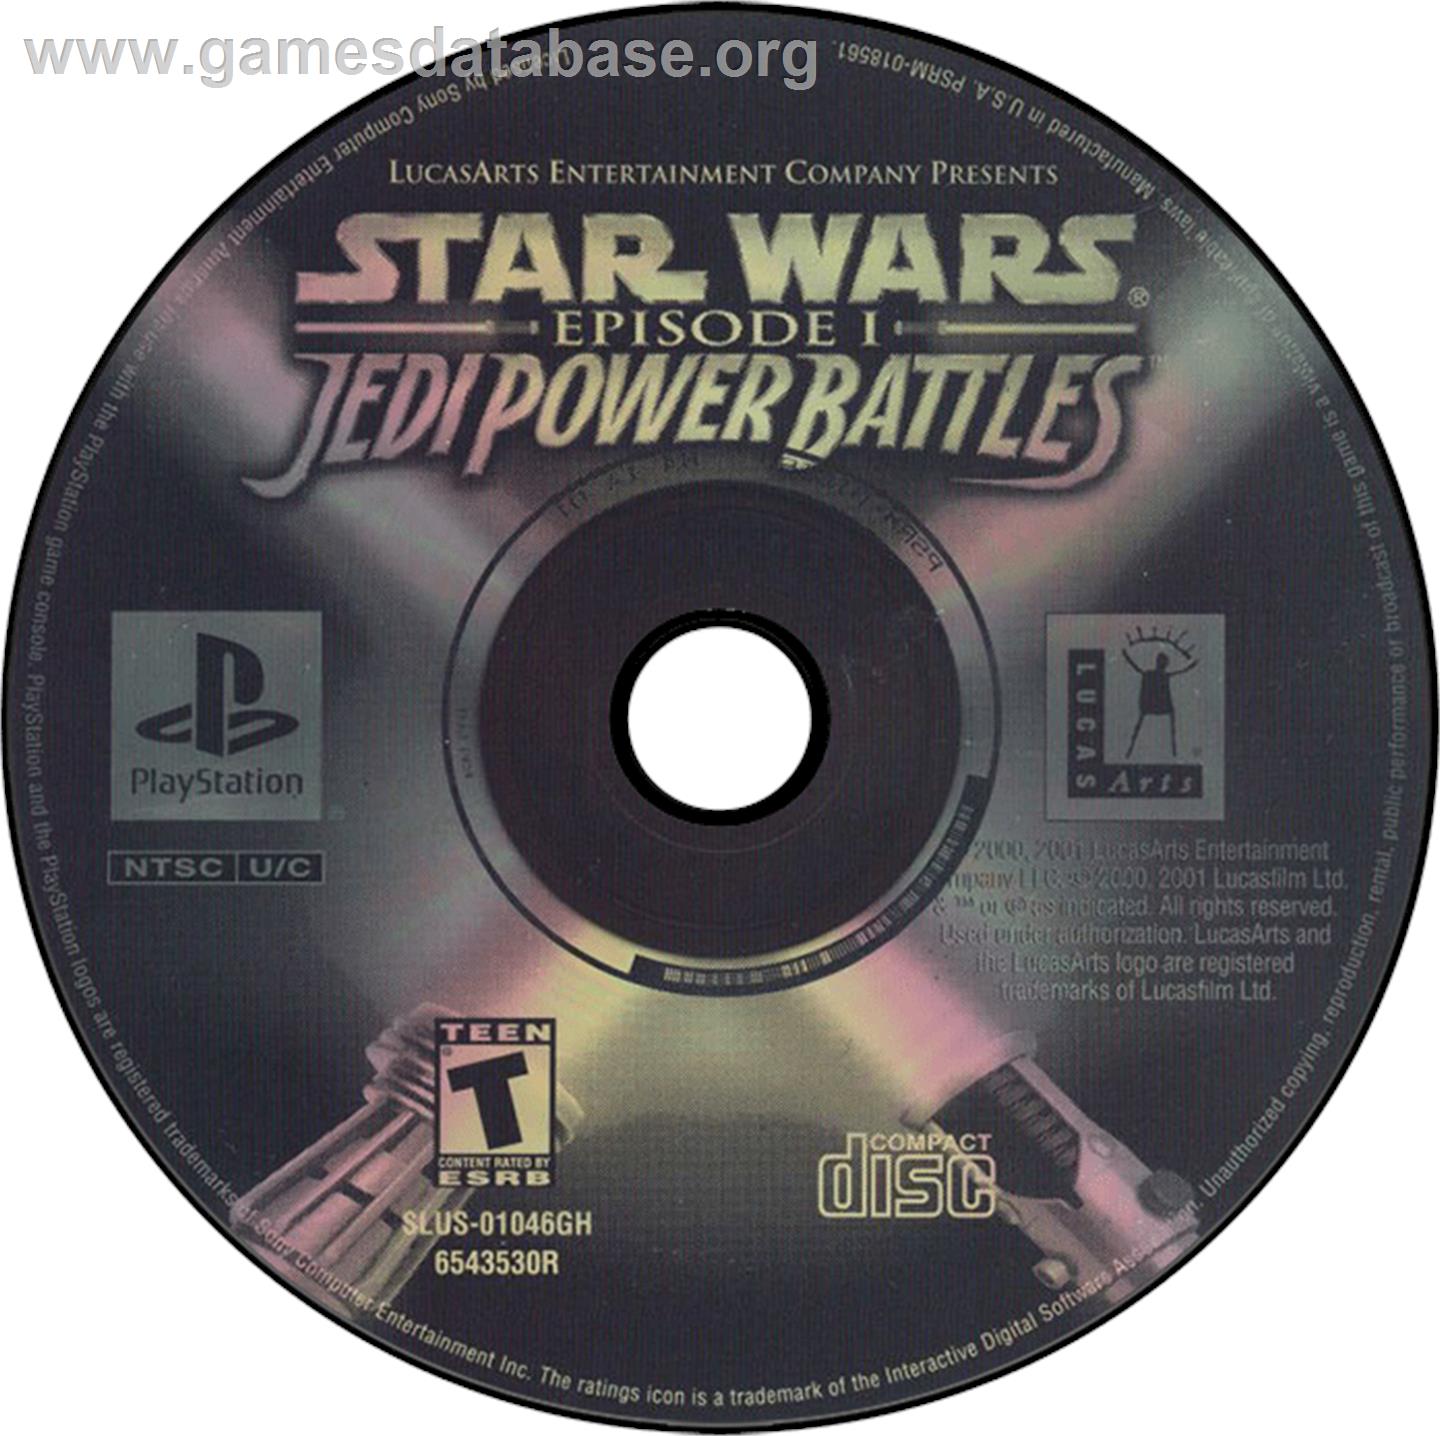 Star Wars: Episode I - Jedi Power Battles - Sony Playstation - Artwork - Disc